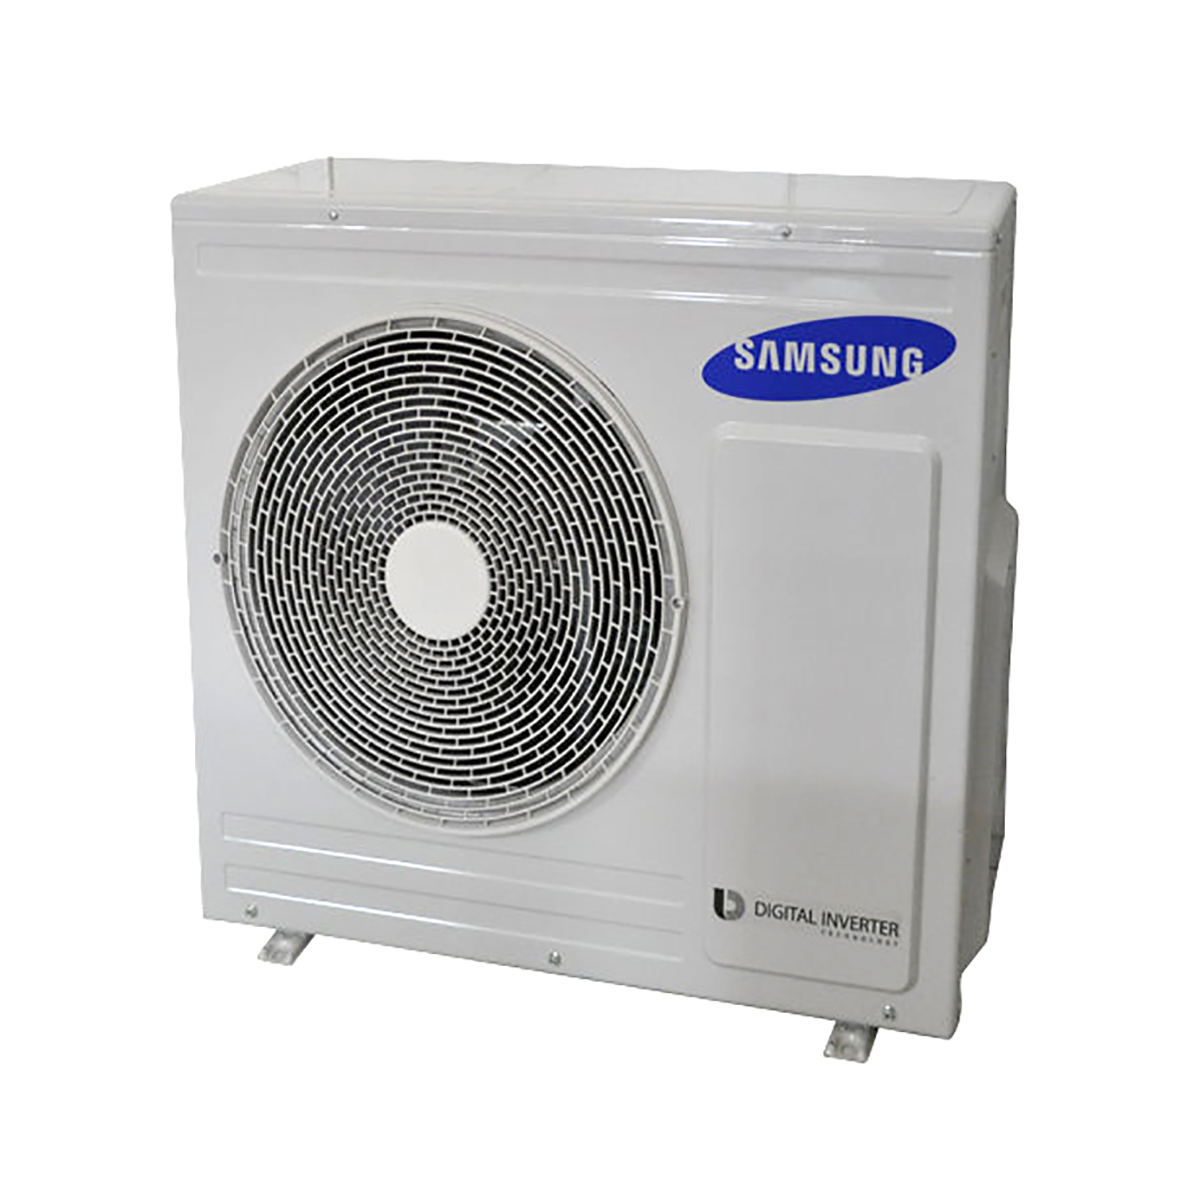 samsung air to water heat pump manual